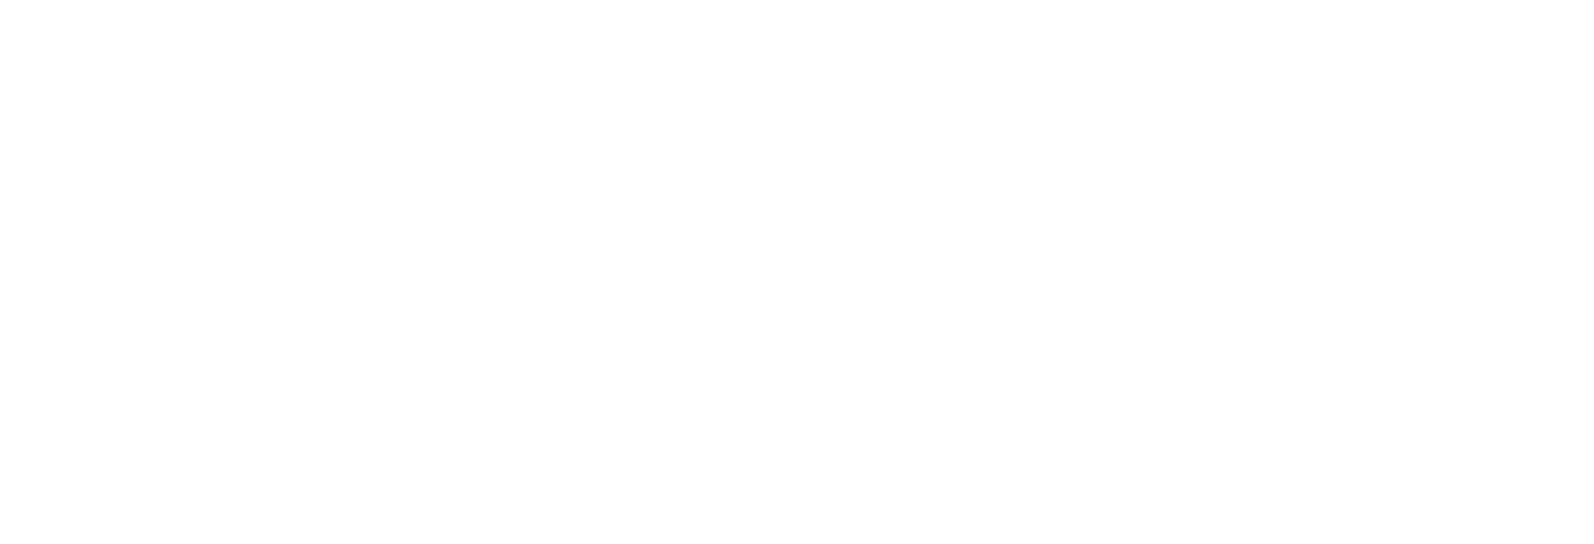 ContextLogic (wish.com) Logo groß für dunkle Hintergründe (transparentes PNG)